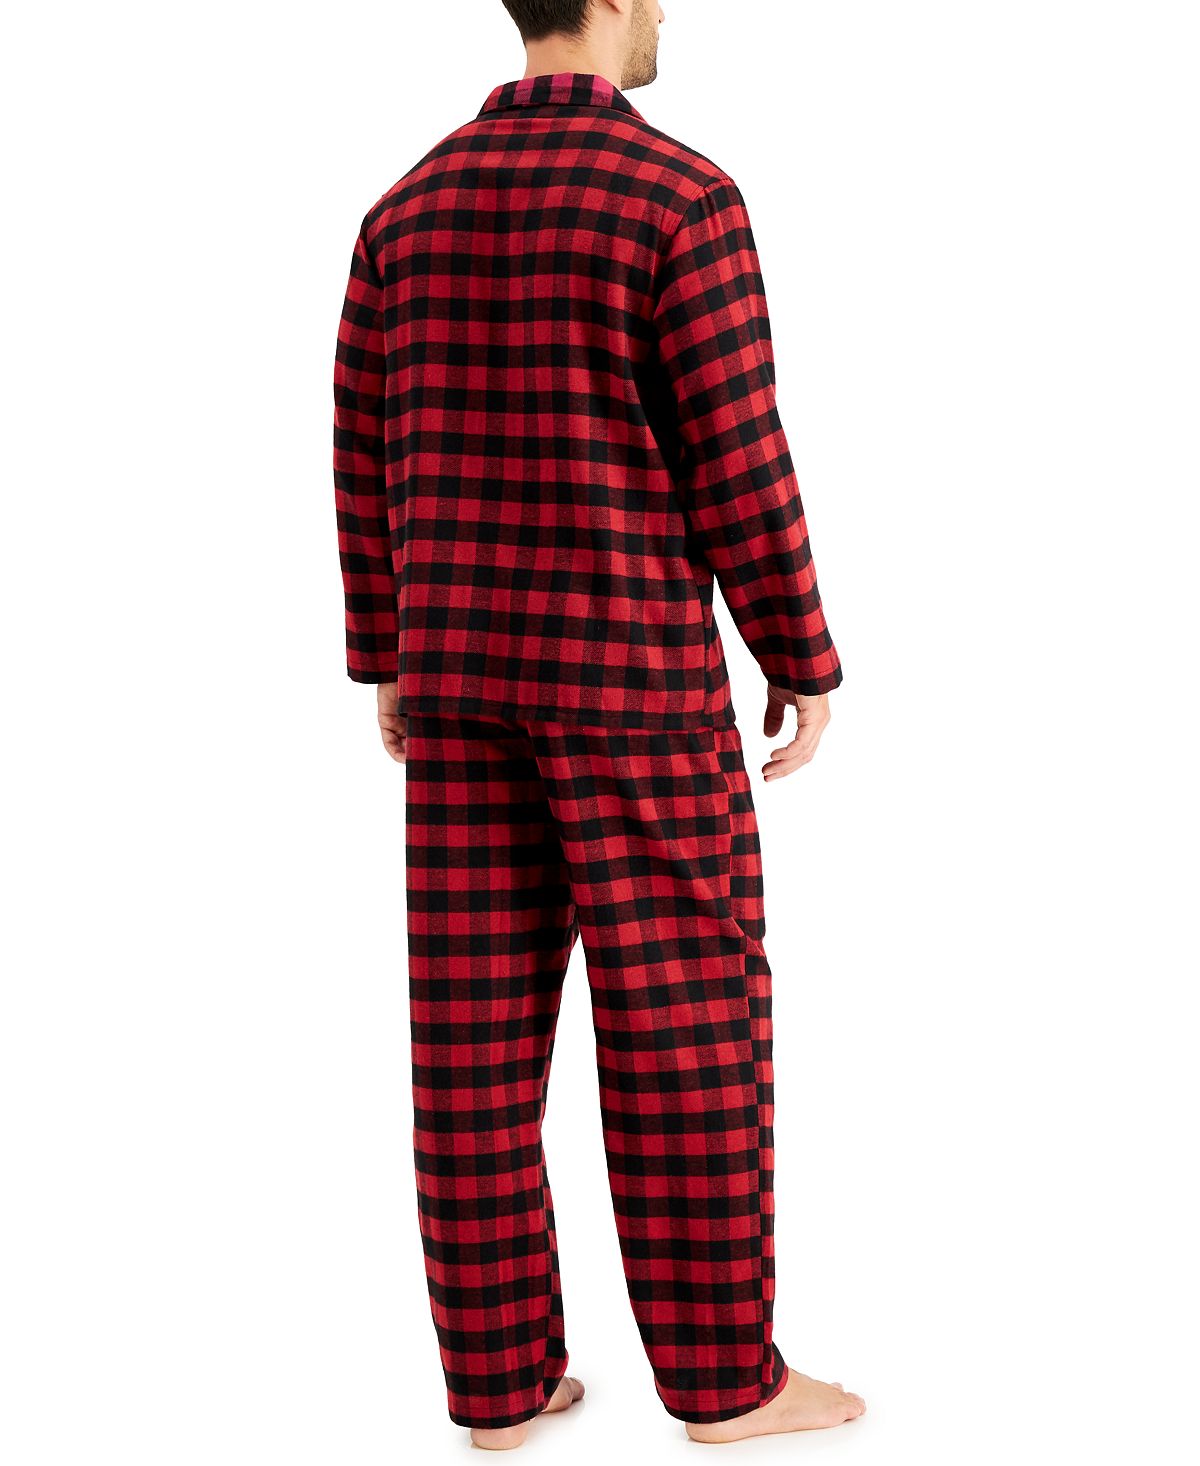 Club Room Pajama Set Red/Black